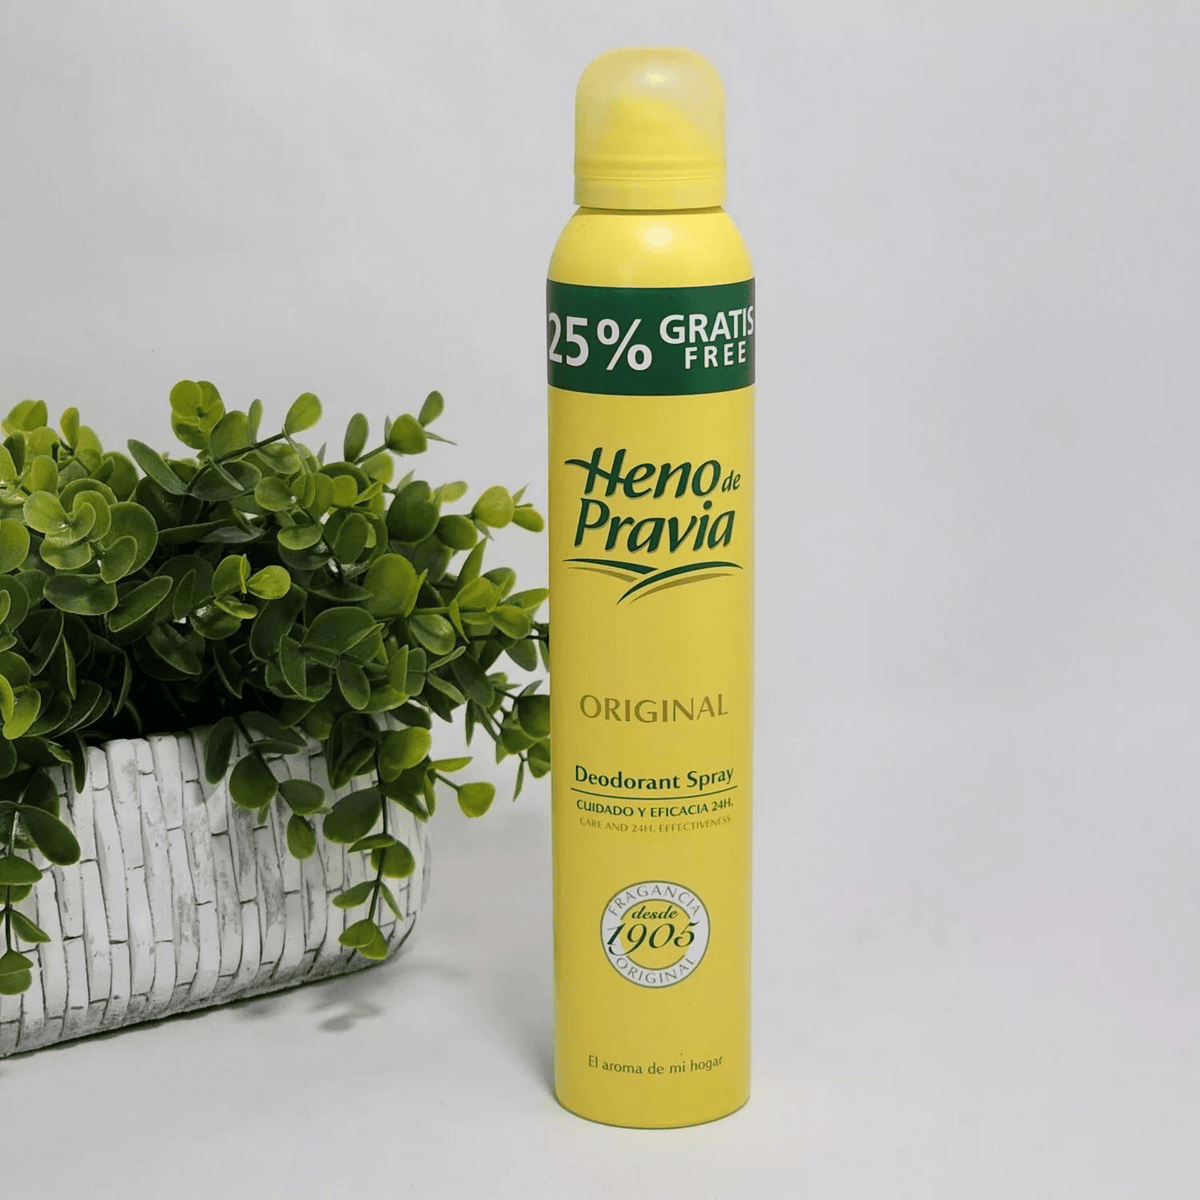 Alternate Image of Original Deodorant Spray